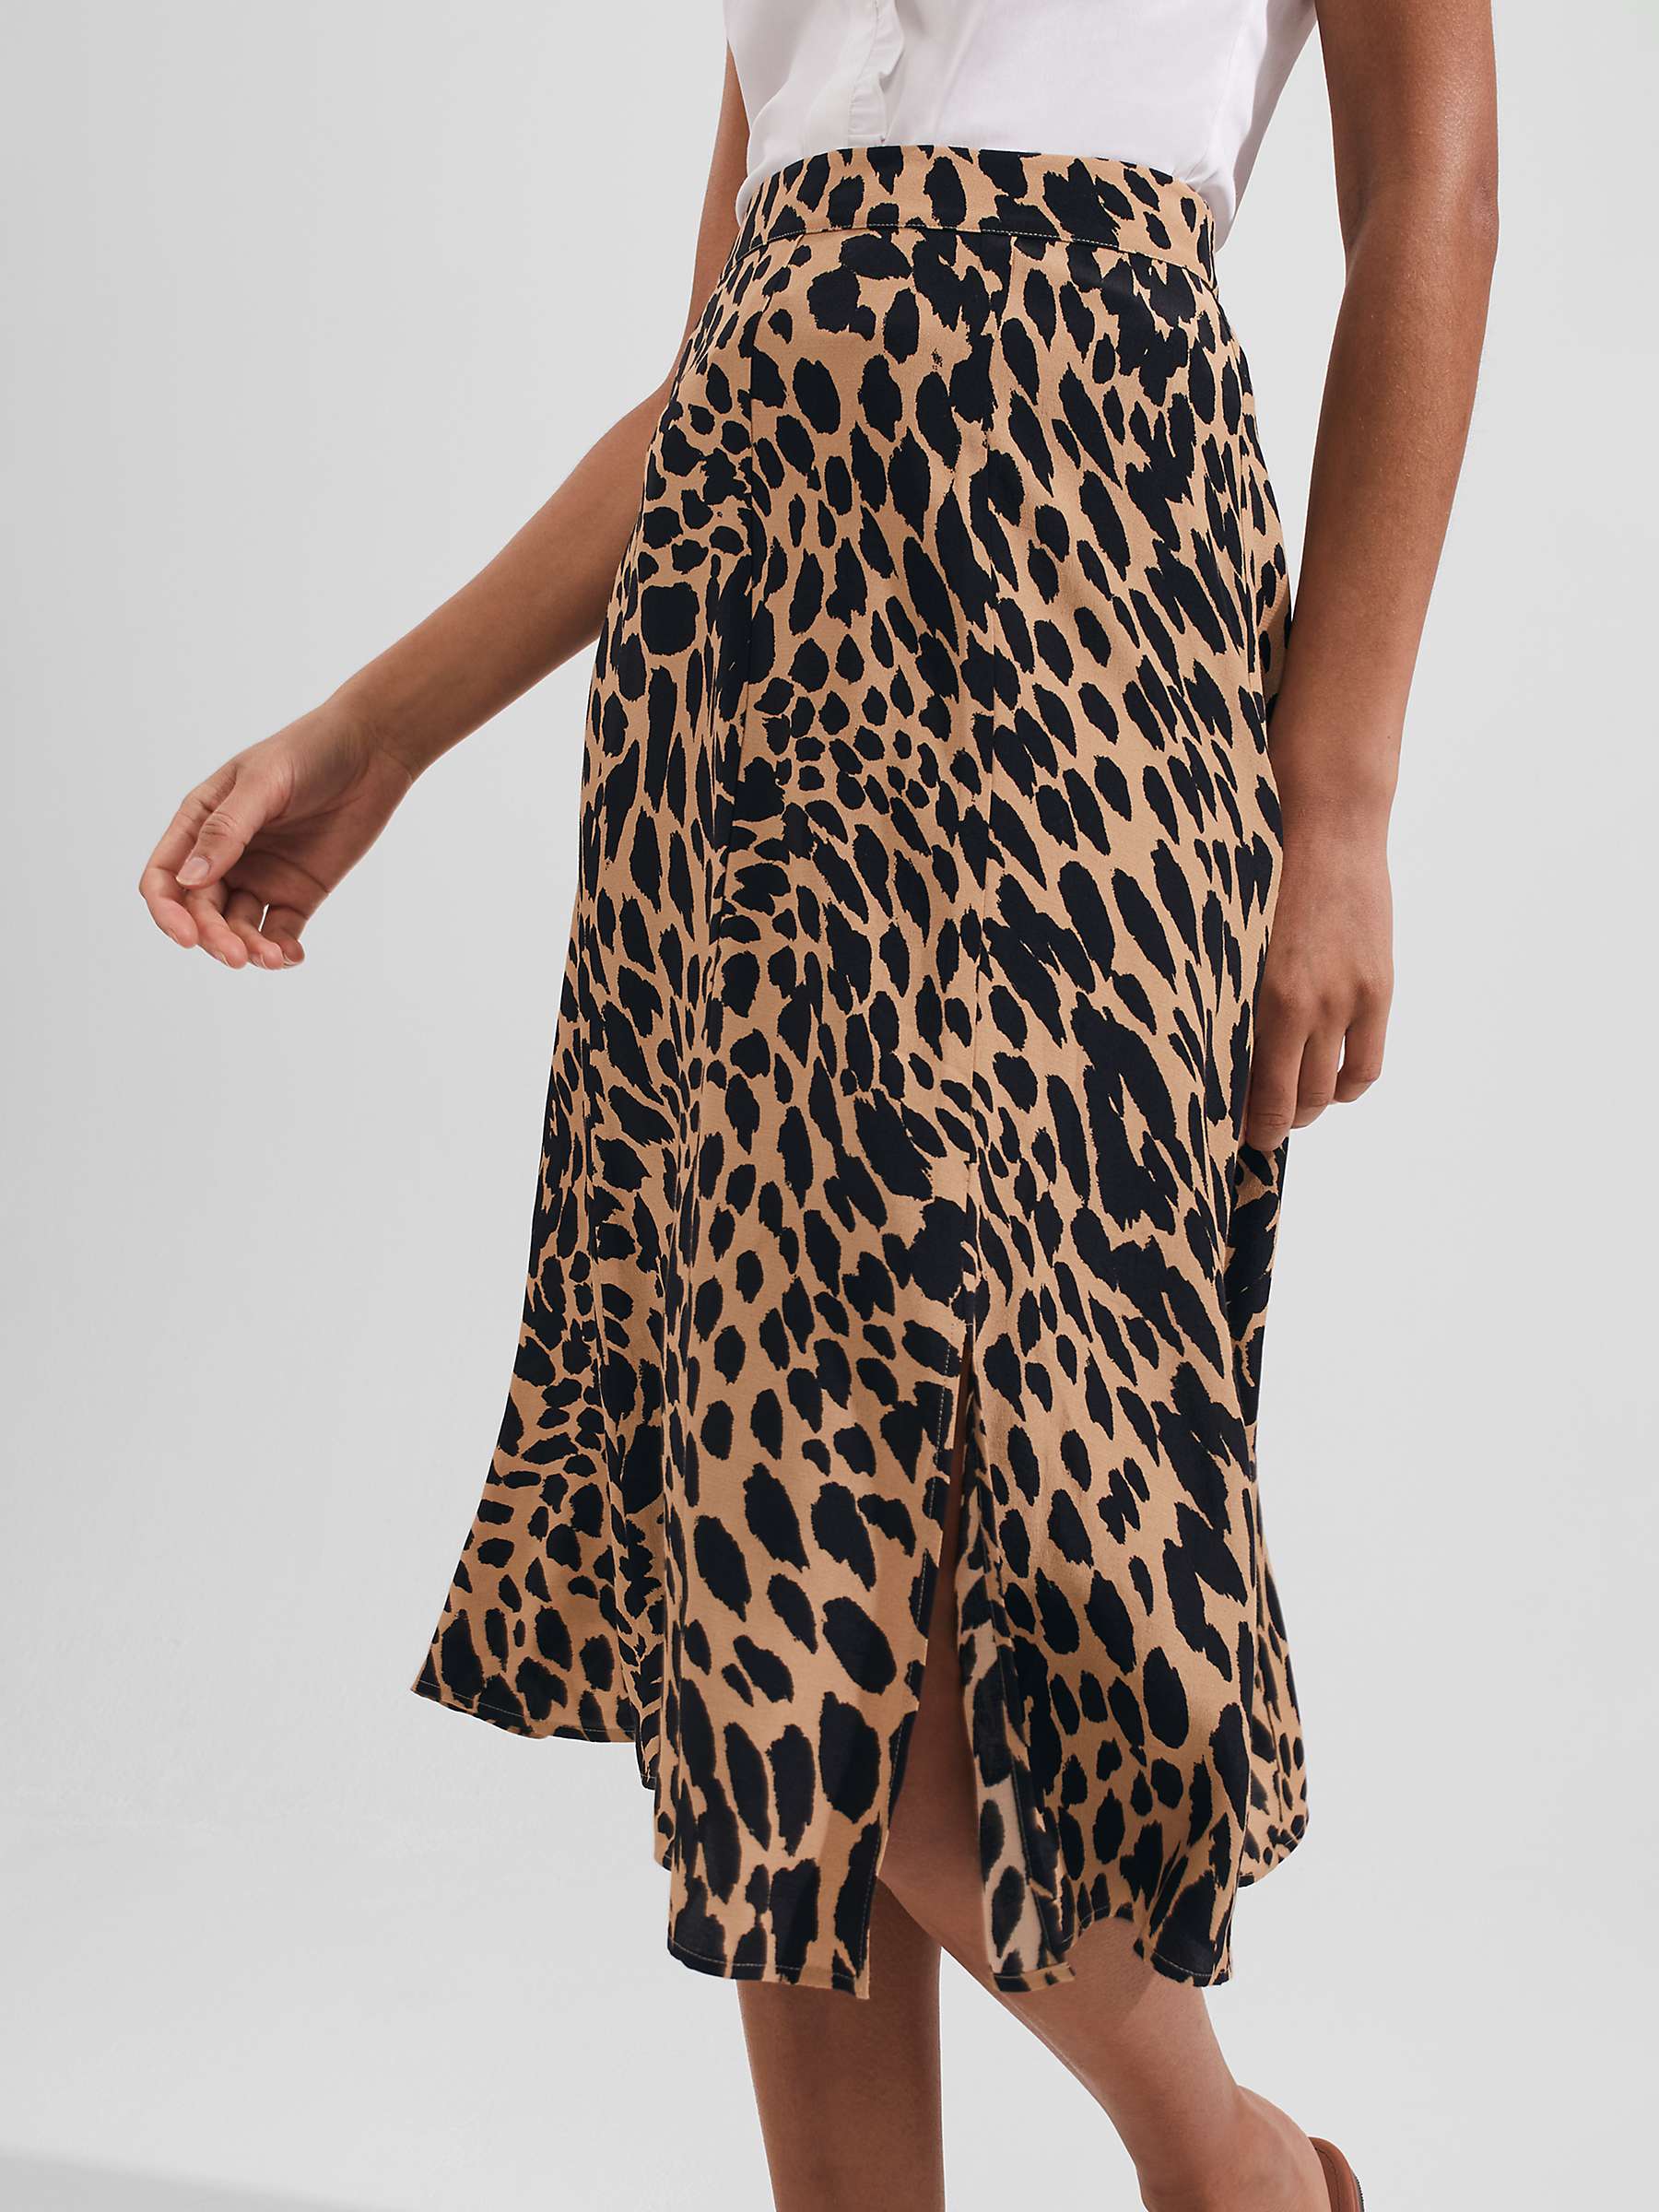 Hobbs Daphne Animal Print Skirt, Camel/Black at John Lewis & Partners